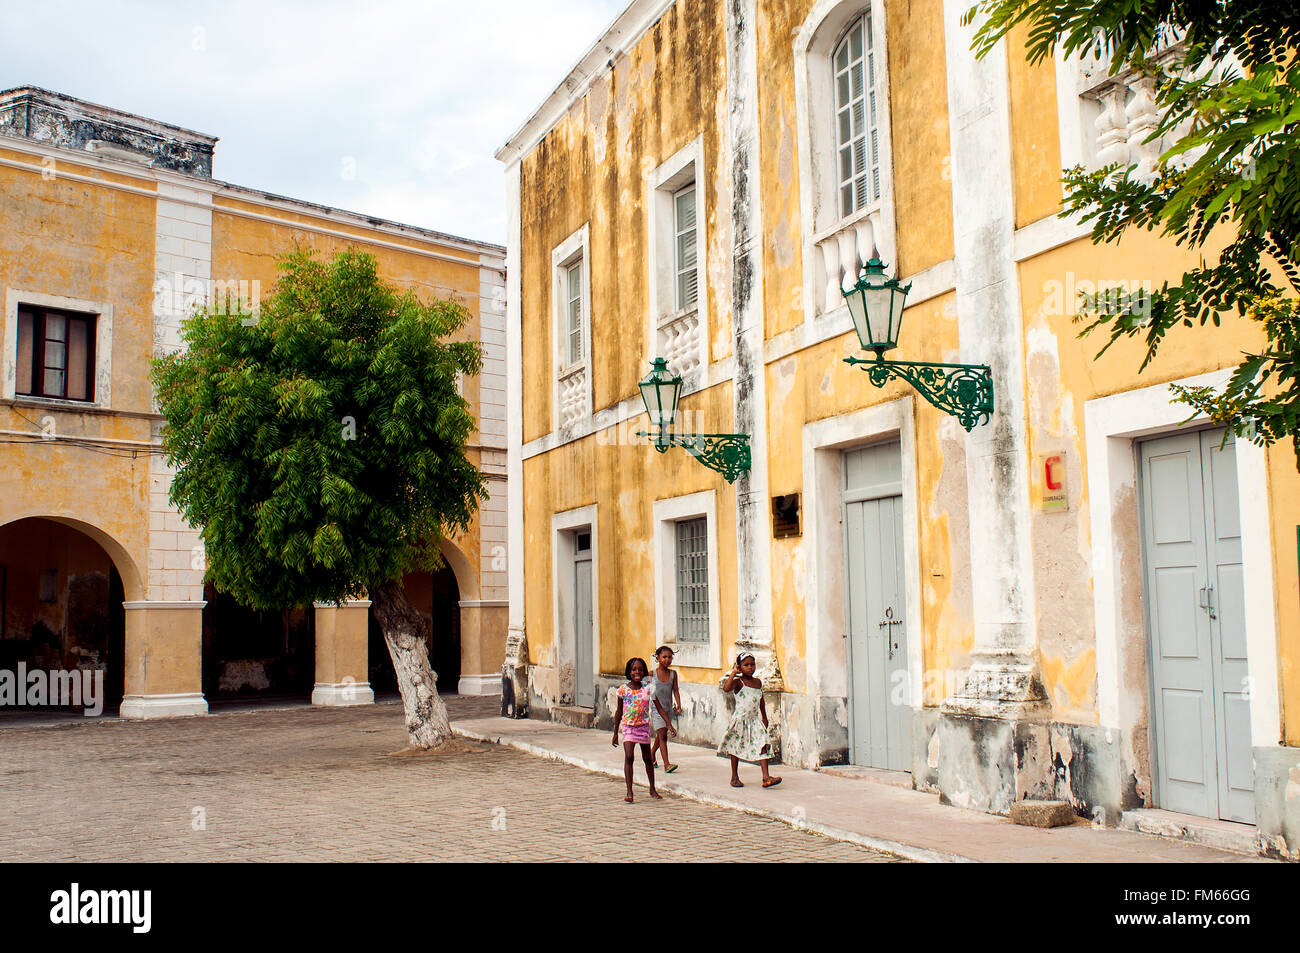 Street scene with colonial buildings, Ilha de Mozambique, Nampula, Mozambique Stock Photo